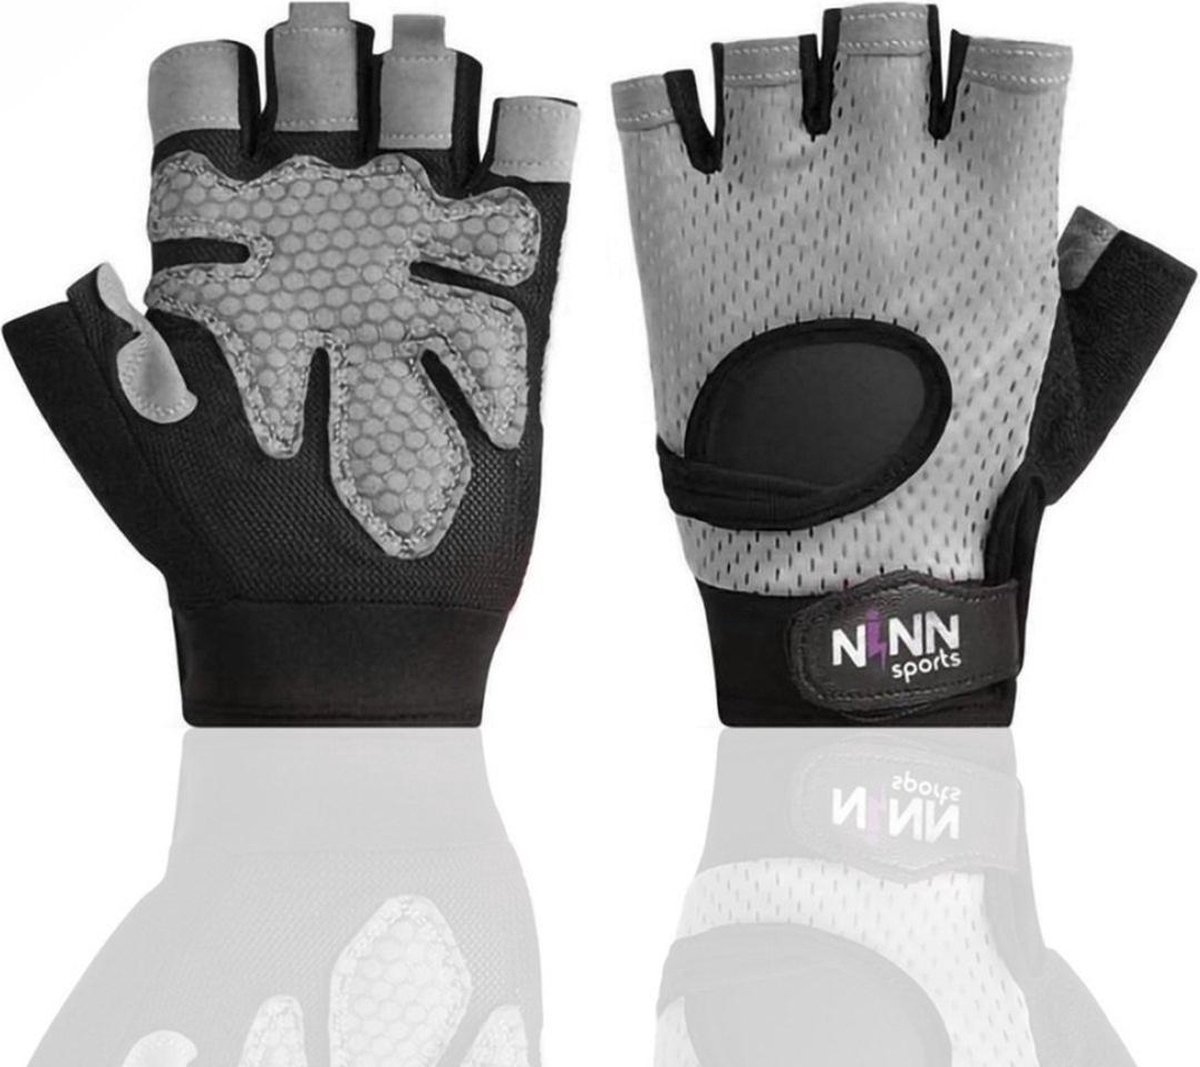 NINN Sports gloves M (Grijs) - fitness handschoenen - Sport handschoenen - Grip Gloves - Fitnesshandschoenen 3 varianten - NINN Sports